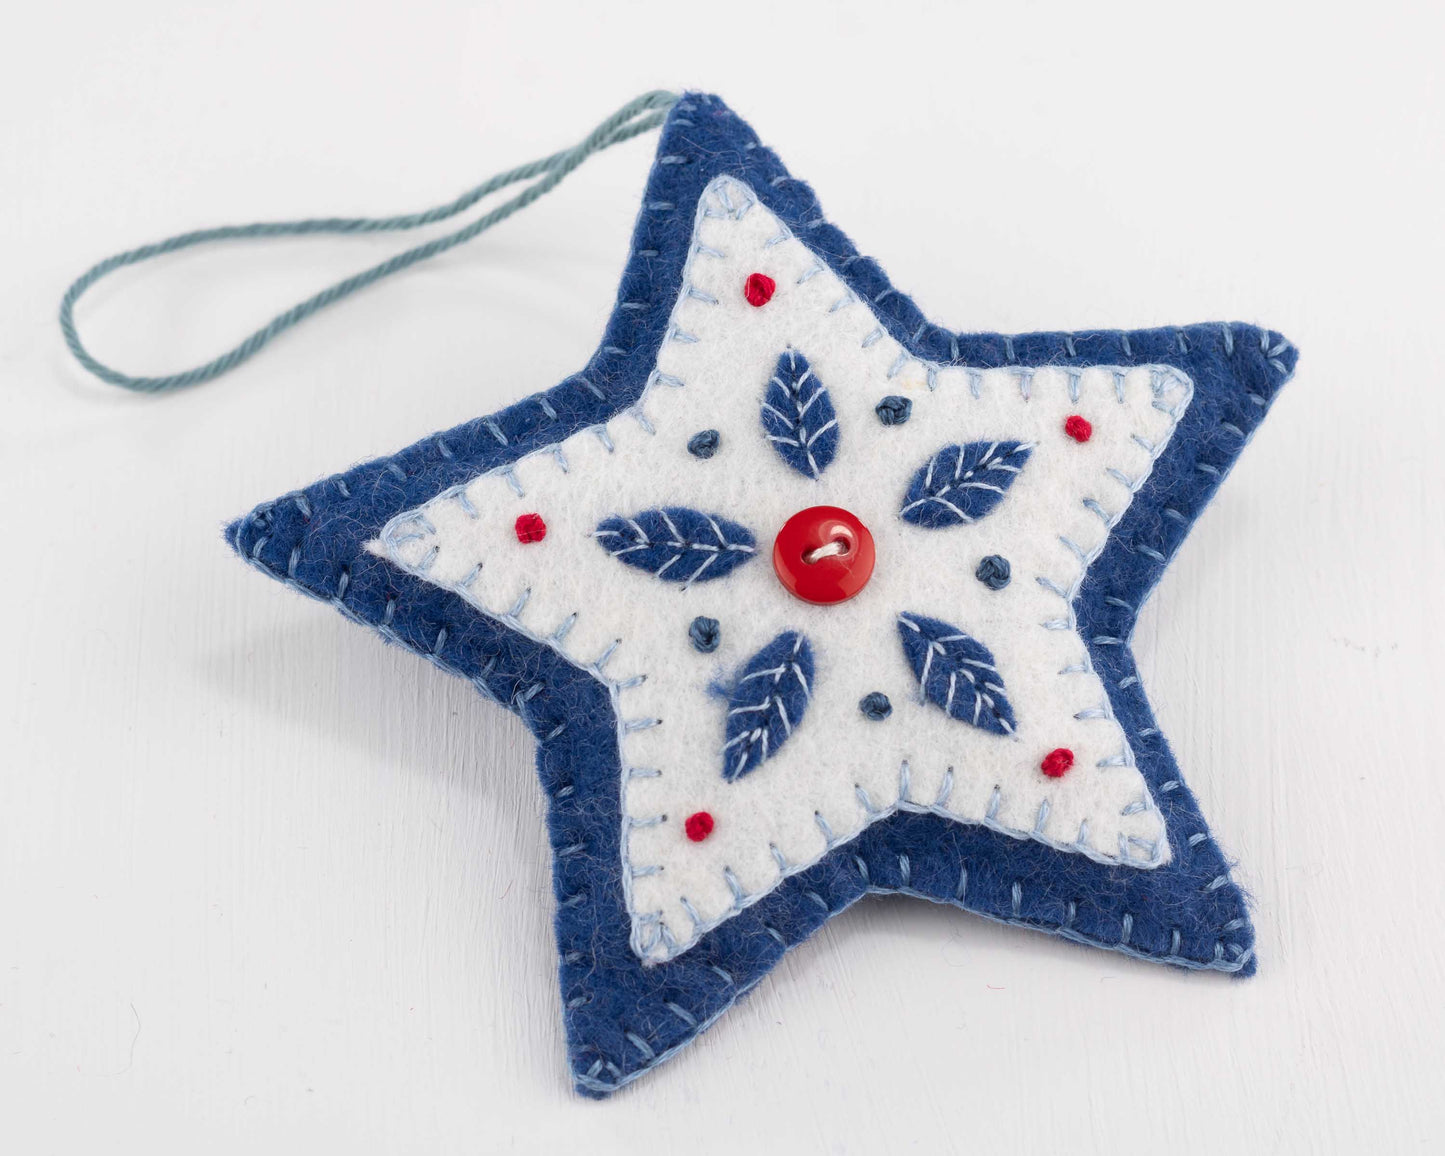 Nordic Folk Art Felt Star Ornament